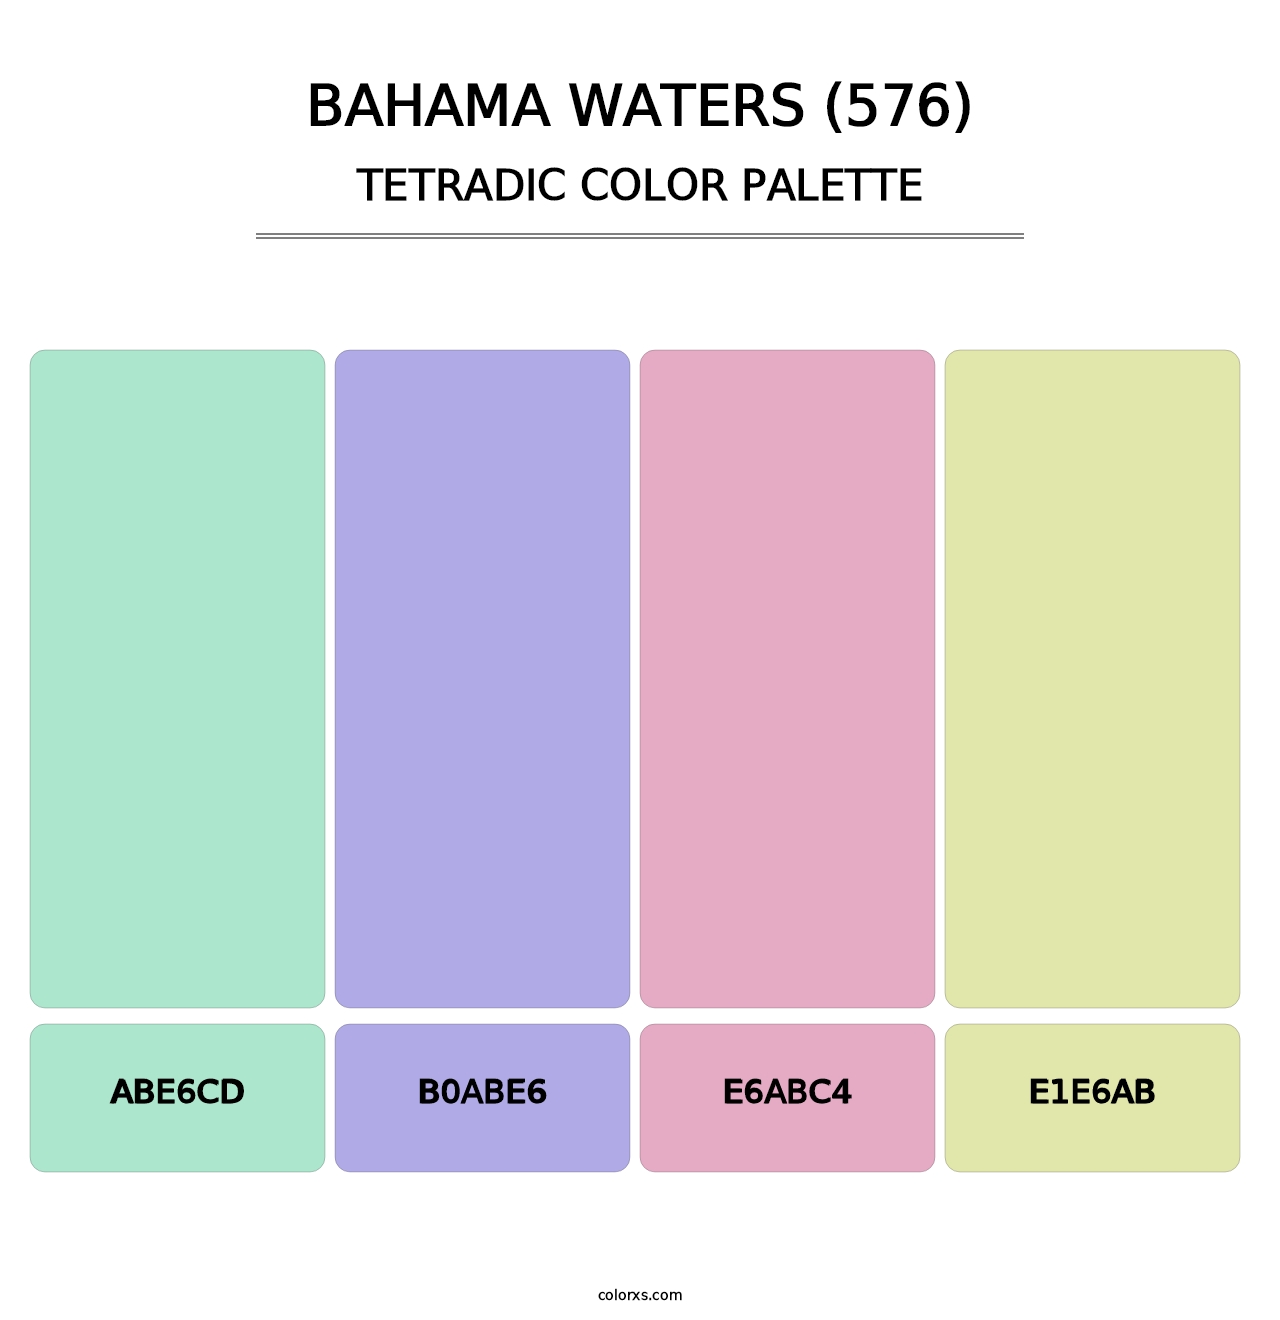 Bahama Waters (576) - Tetradic Color Palette